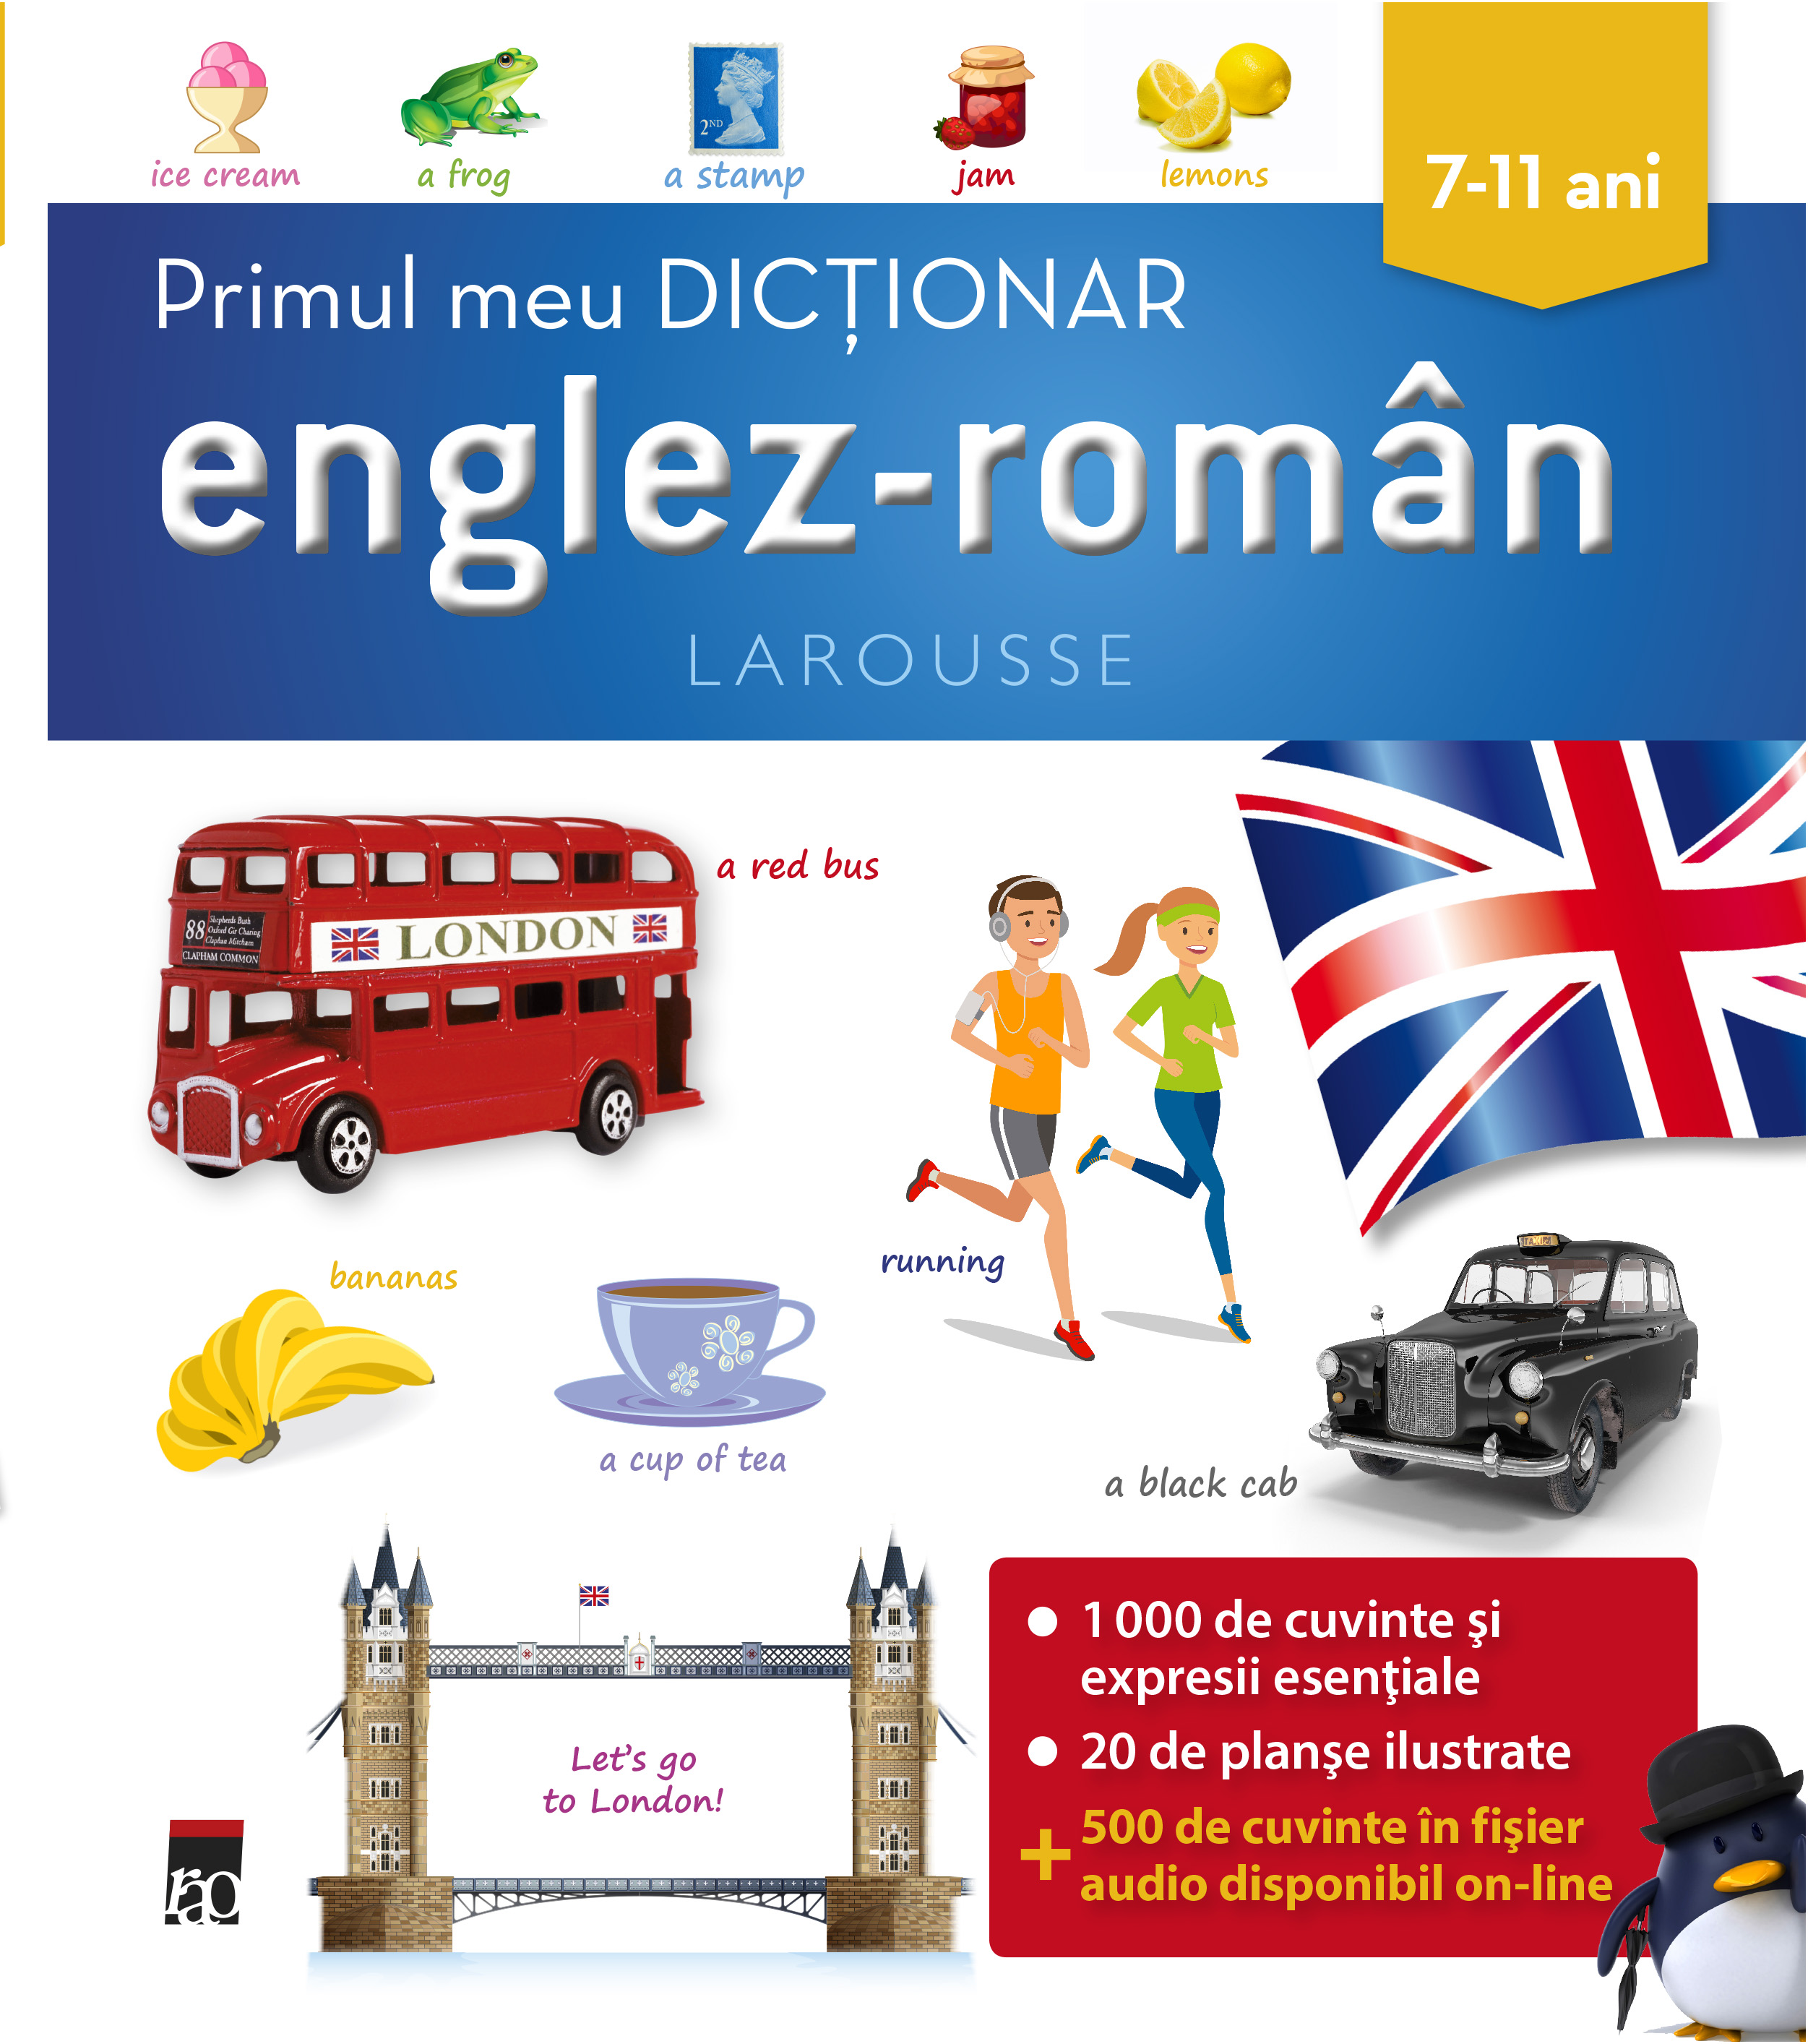 Primul meu dictionar englez – roman | Larousse carturesti.ro poza bestsellers.ro